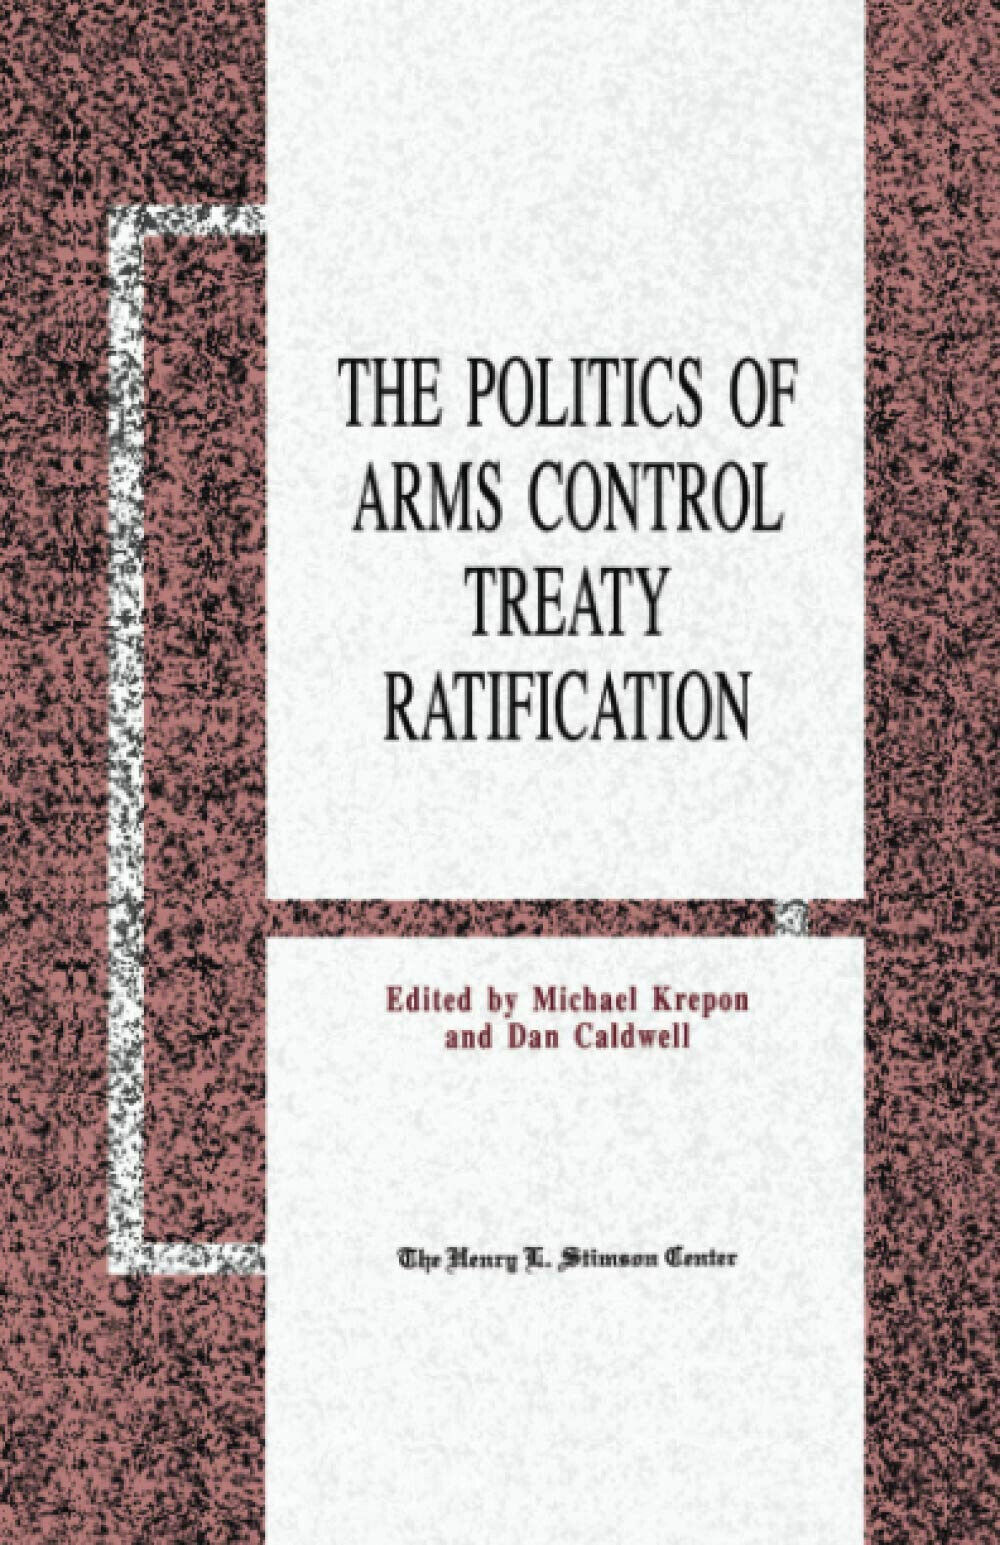 The Politics of Arms Control Treaty Ratification - M. Krepon - Palgrave, 1992 libro usato